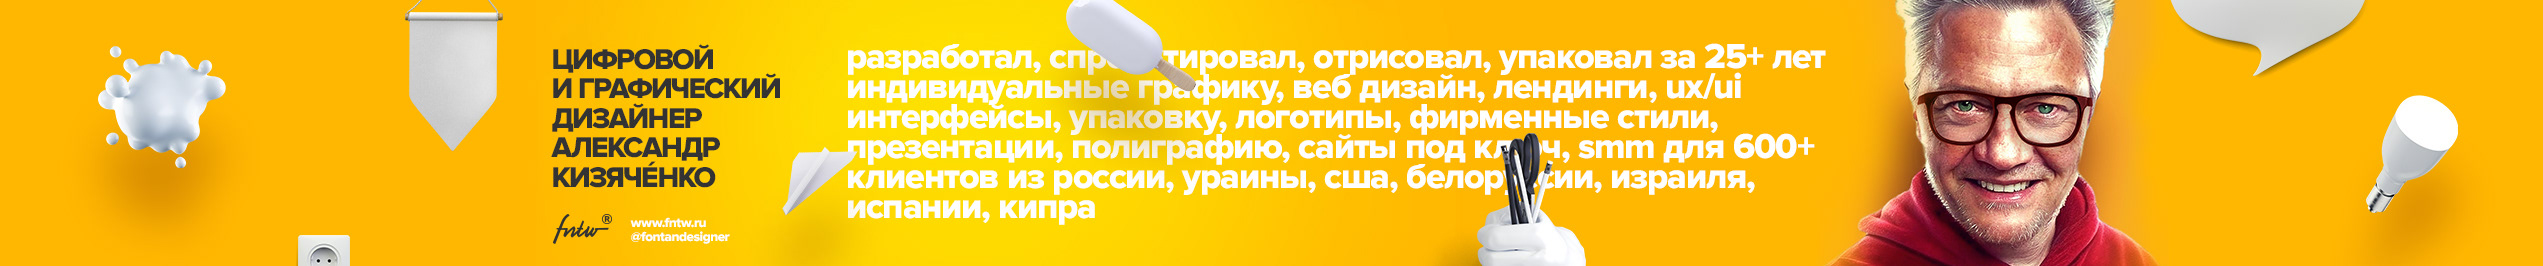 Banner de perfil de Alexander Kizyachenko